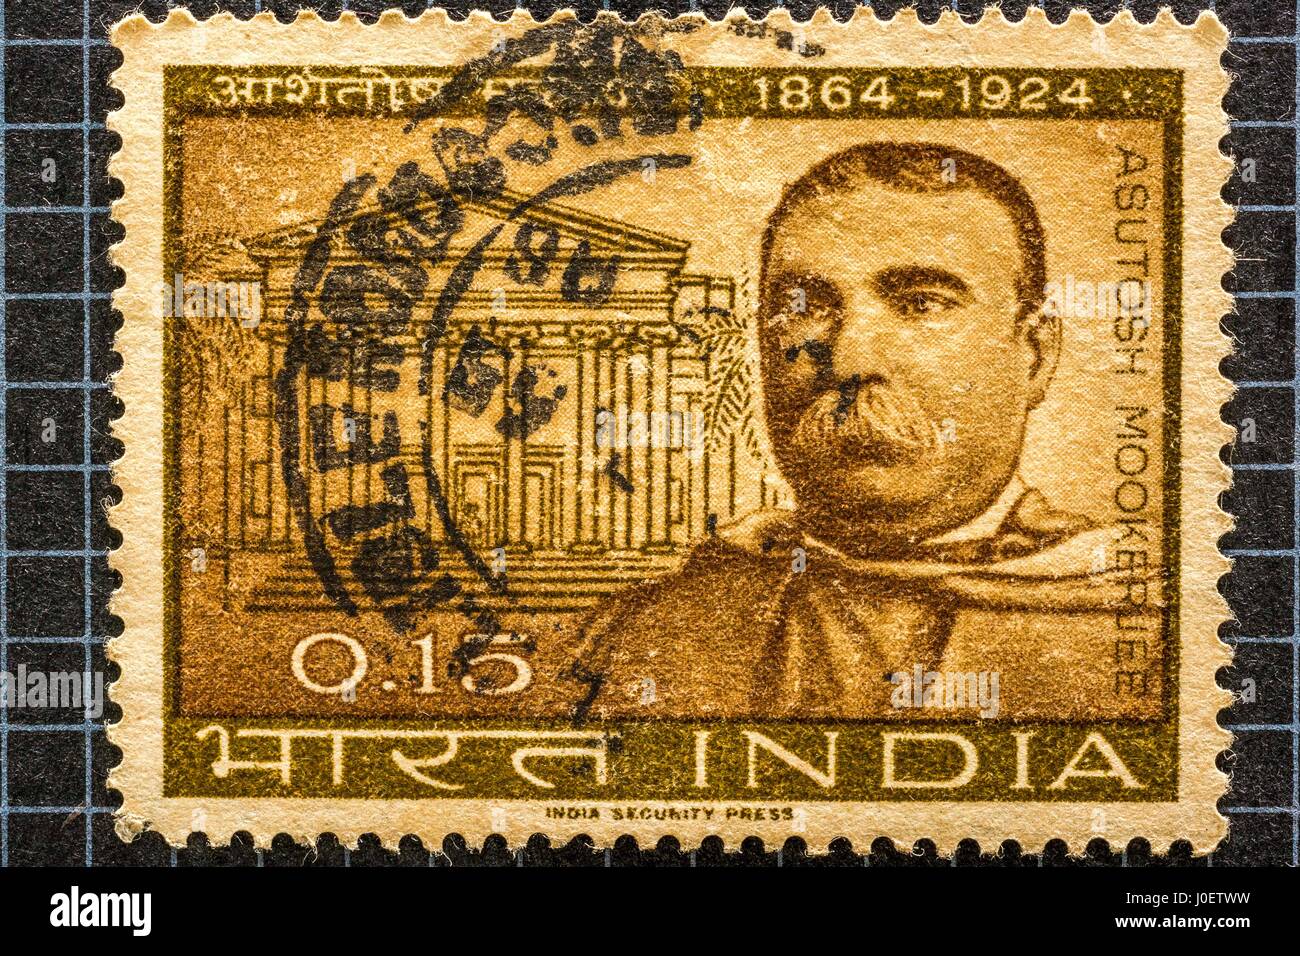 Indian postage stamp of Asutosh Mookerjee, 15 paisa postage stamps, india, asia Stock Photo